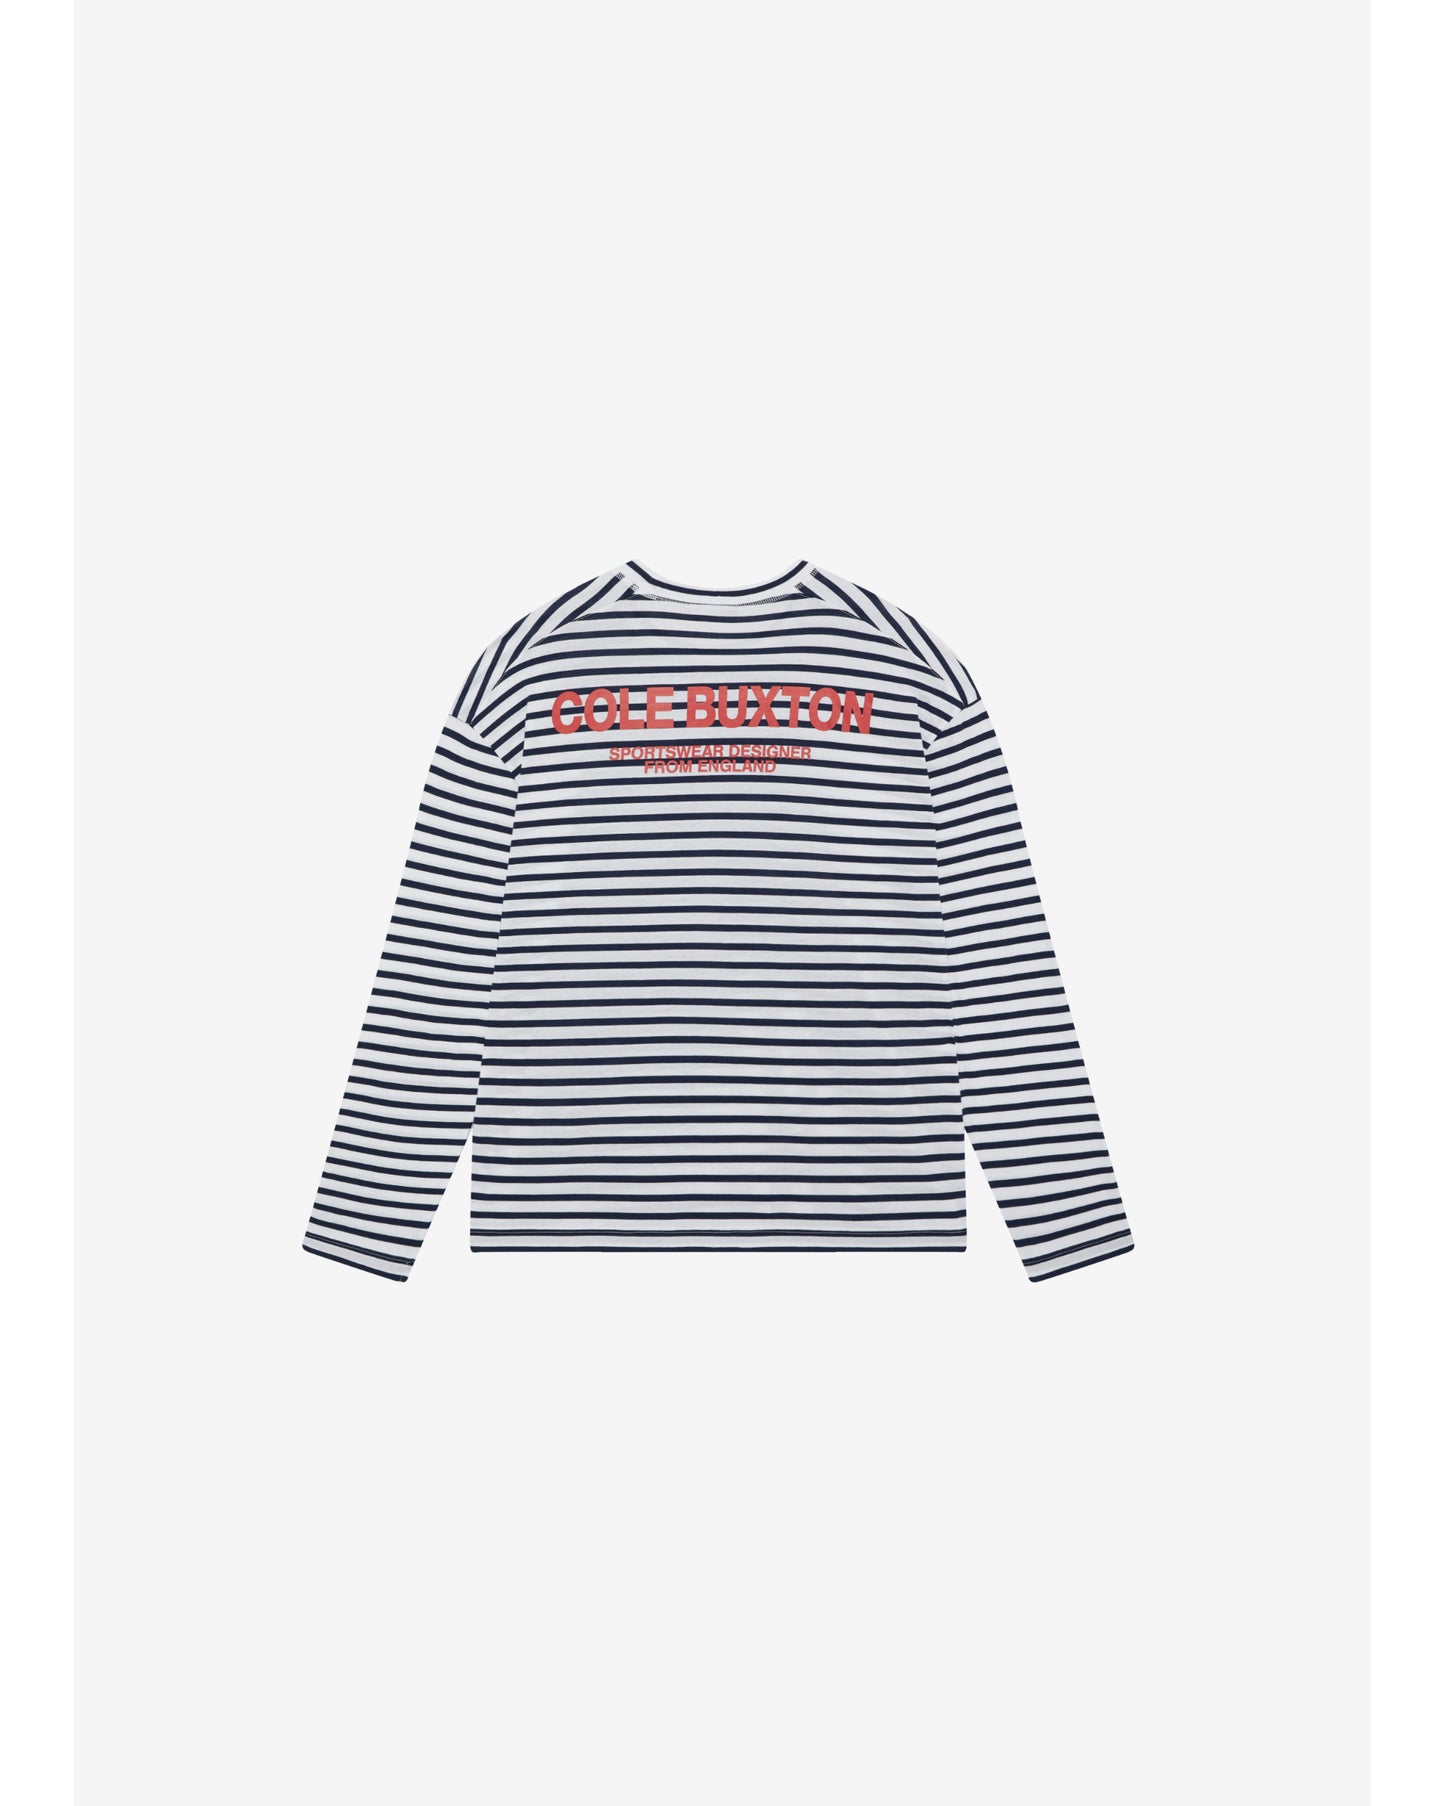 Cole Buxton | Sportswear Long Sleeved Striped T-Shirt | Mens | Cotton | Blue / White